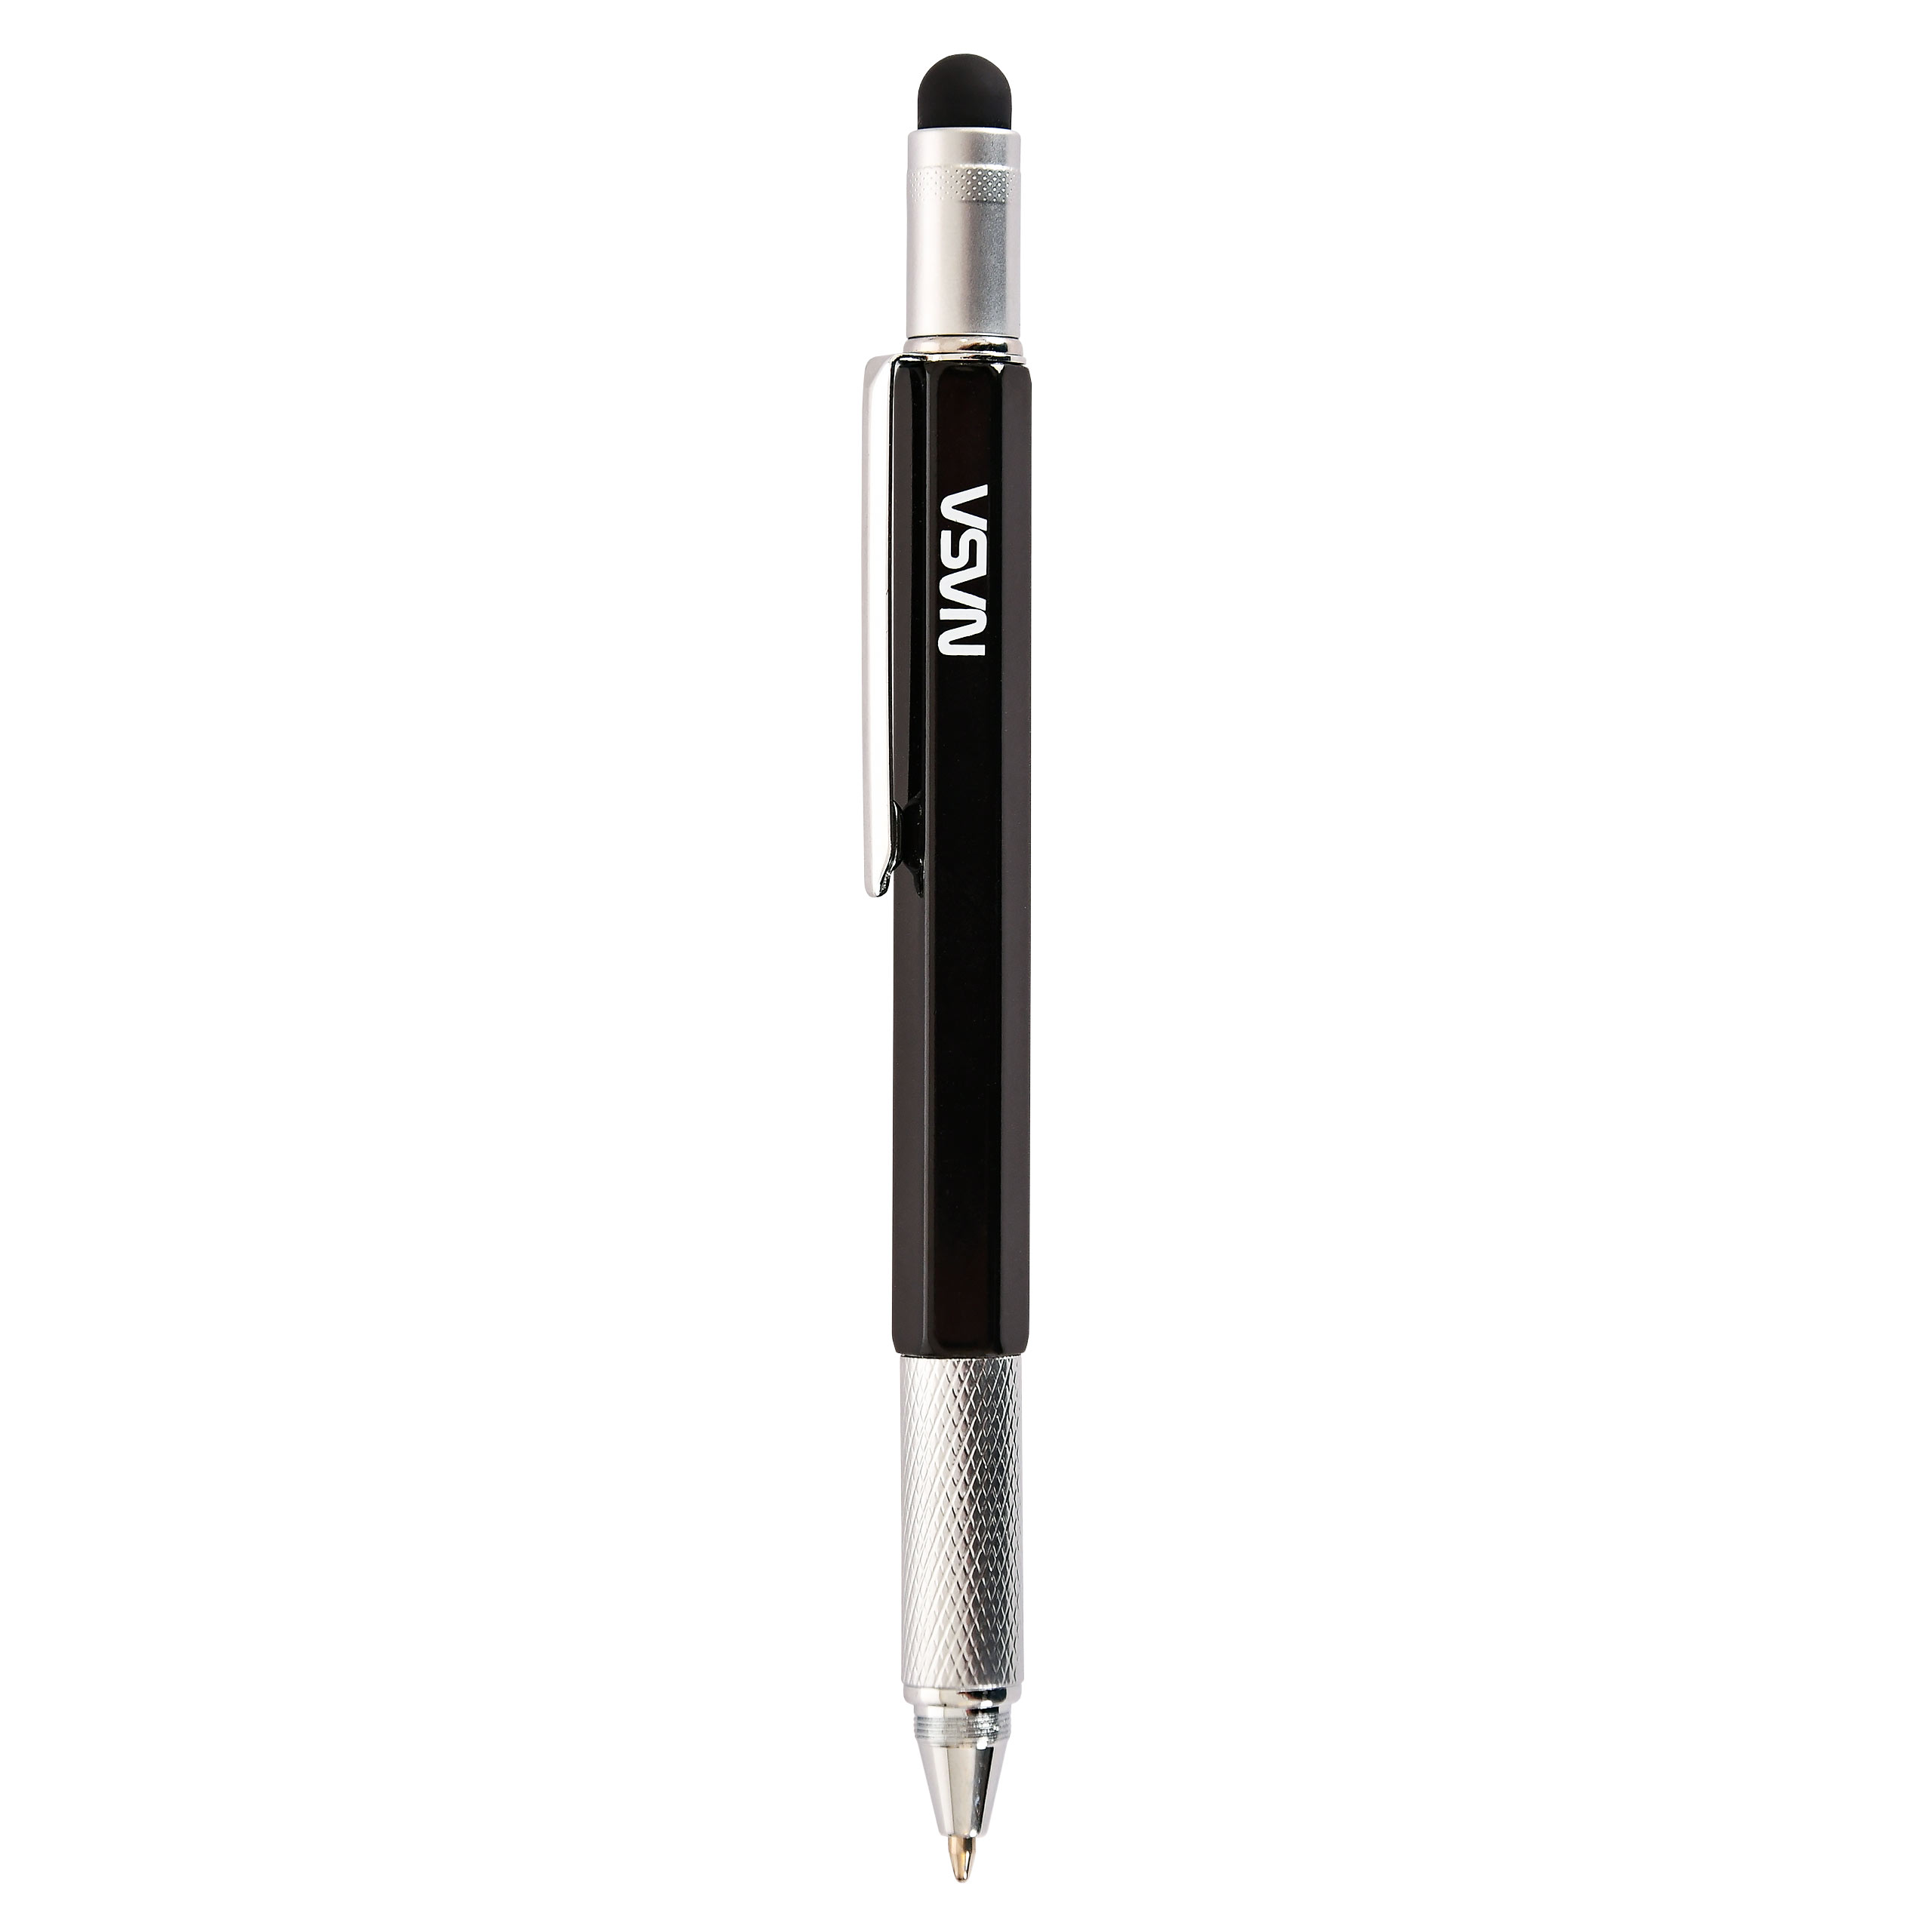 NASA - Multi-Function Pen